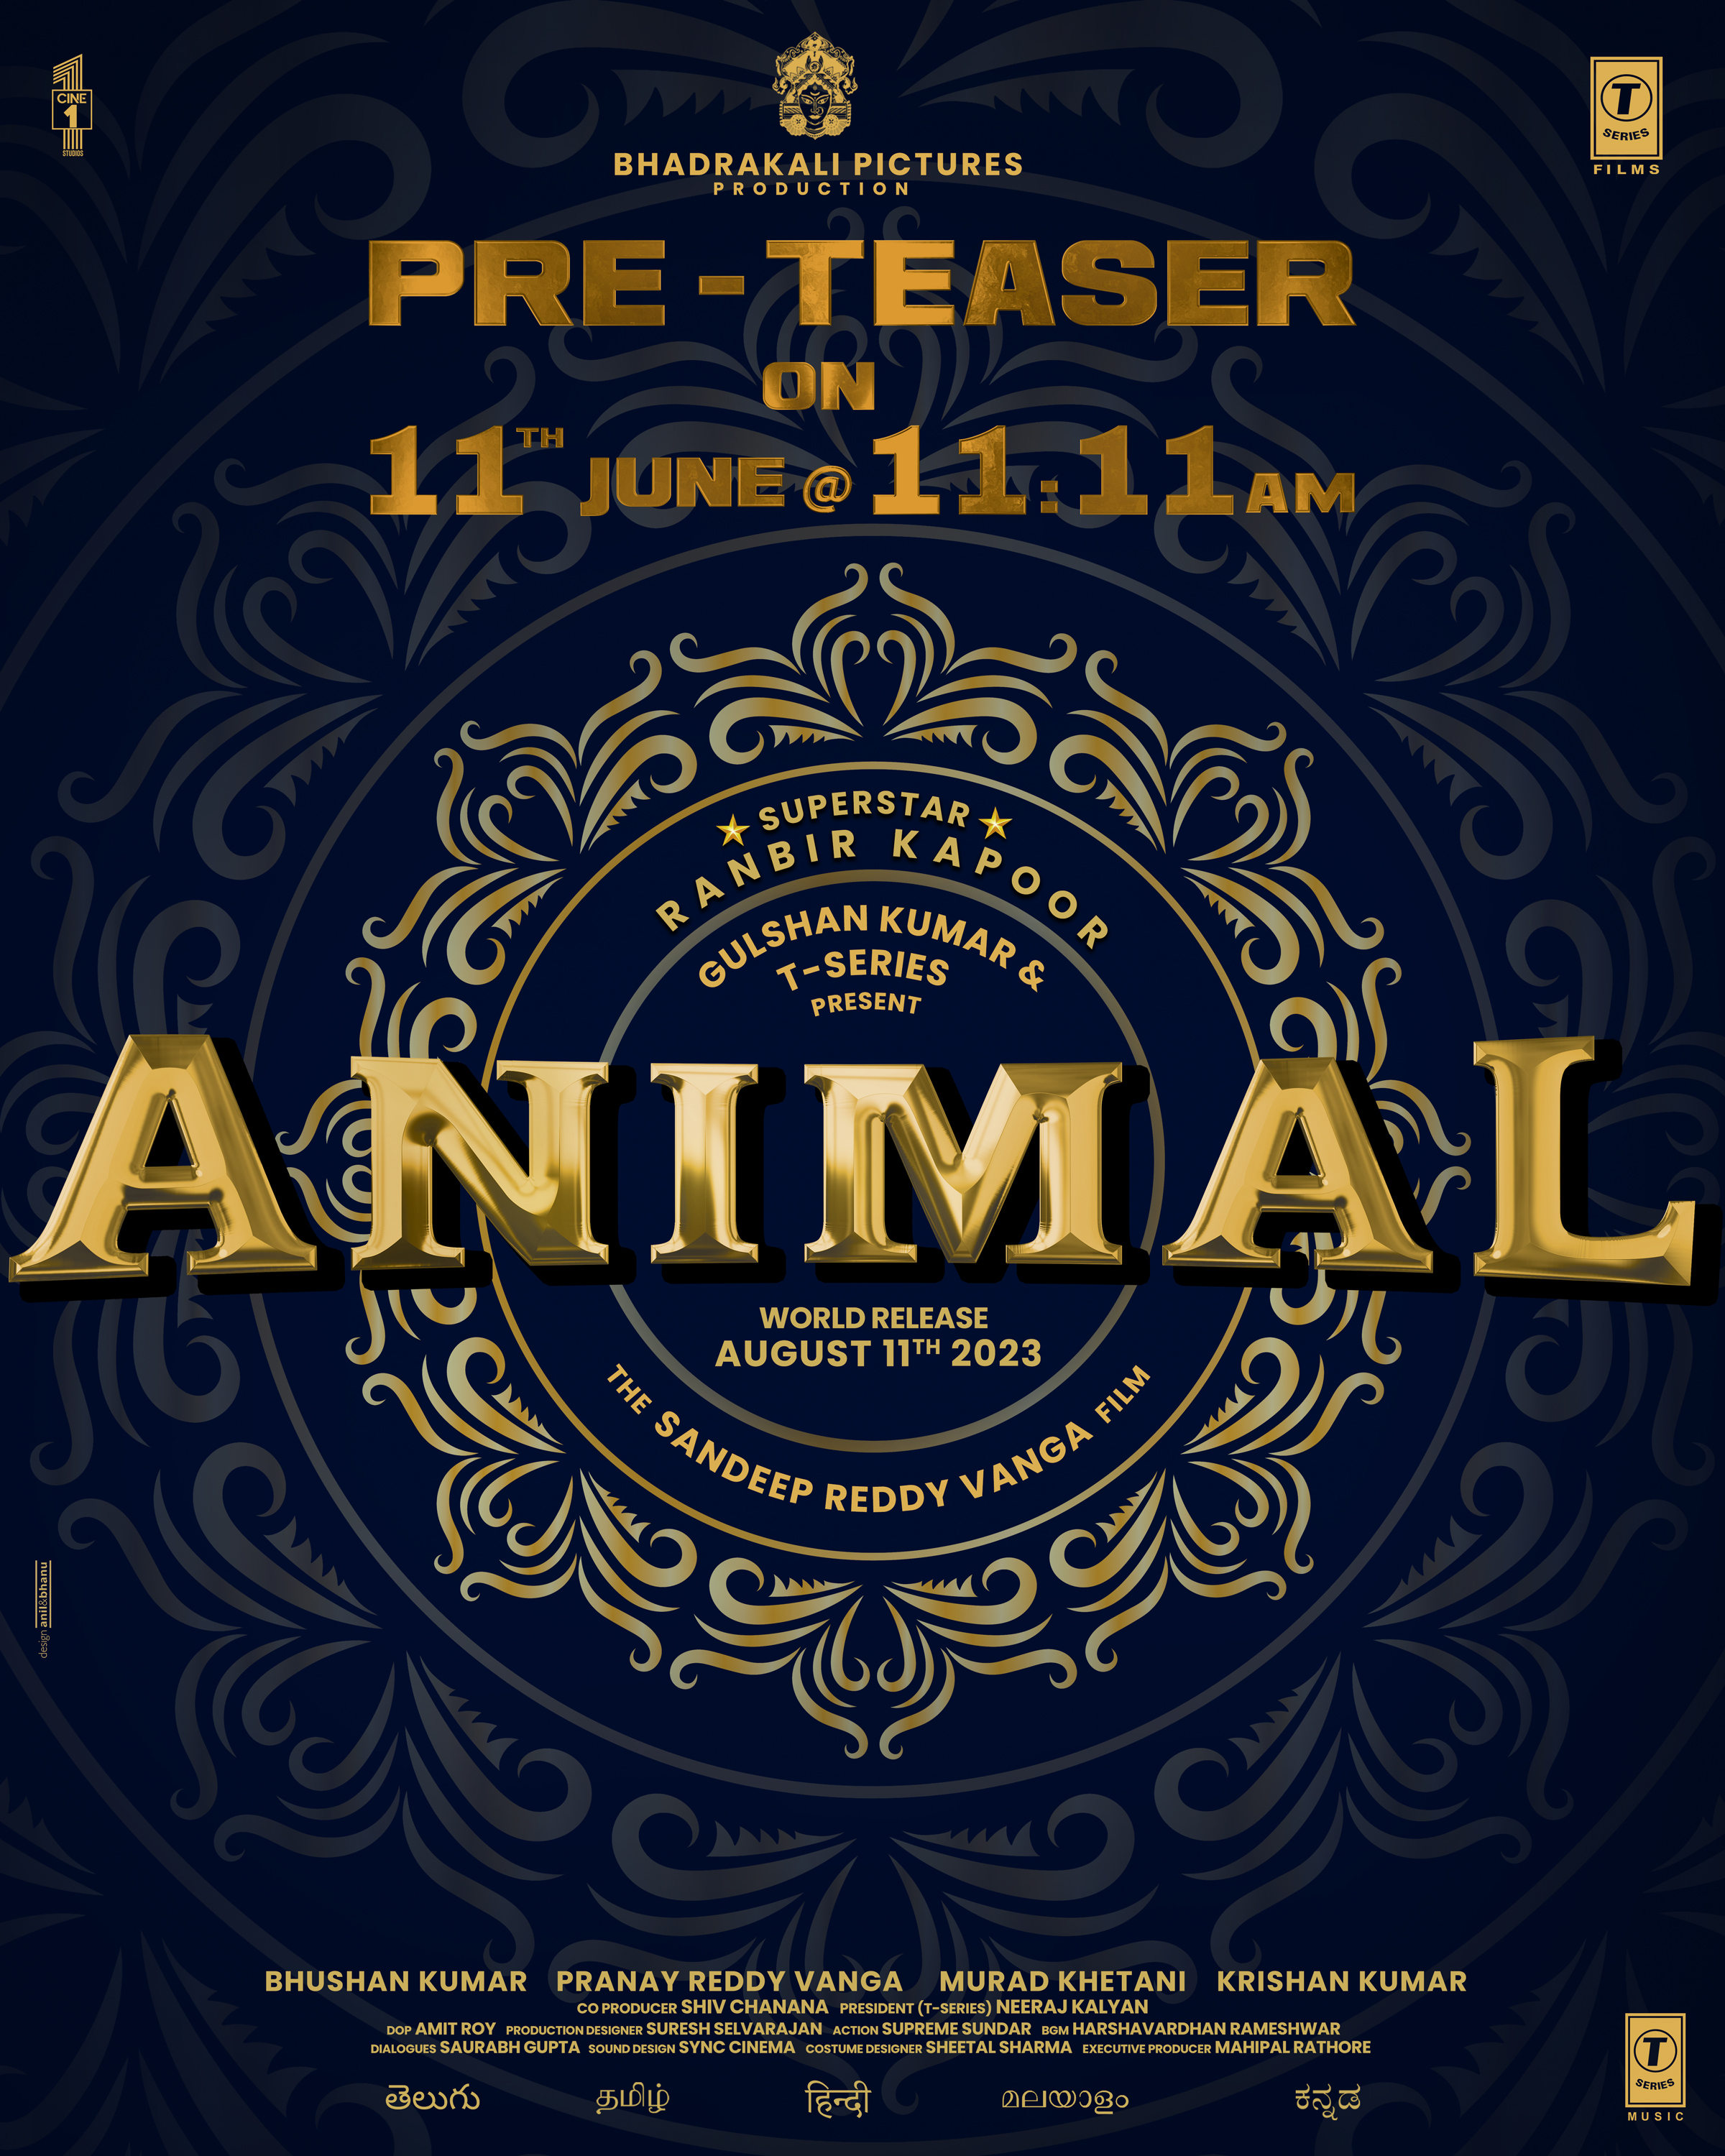 Roaring Excitement: Sandeep Reddy Vanga's directorial ‘Animal' starring Ranbir Kapoor announce Pre-Teaser tomorrow!